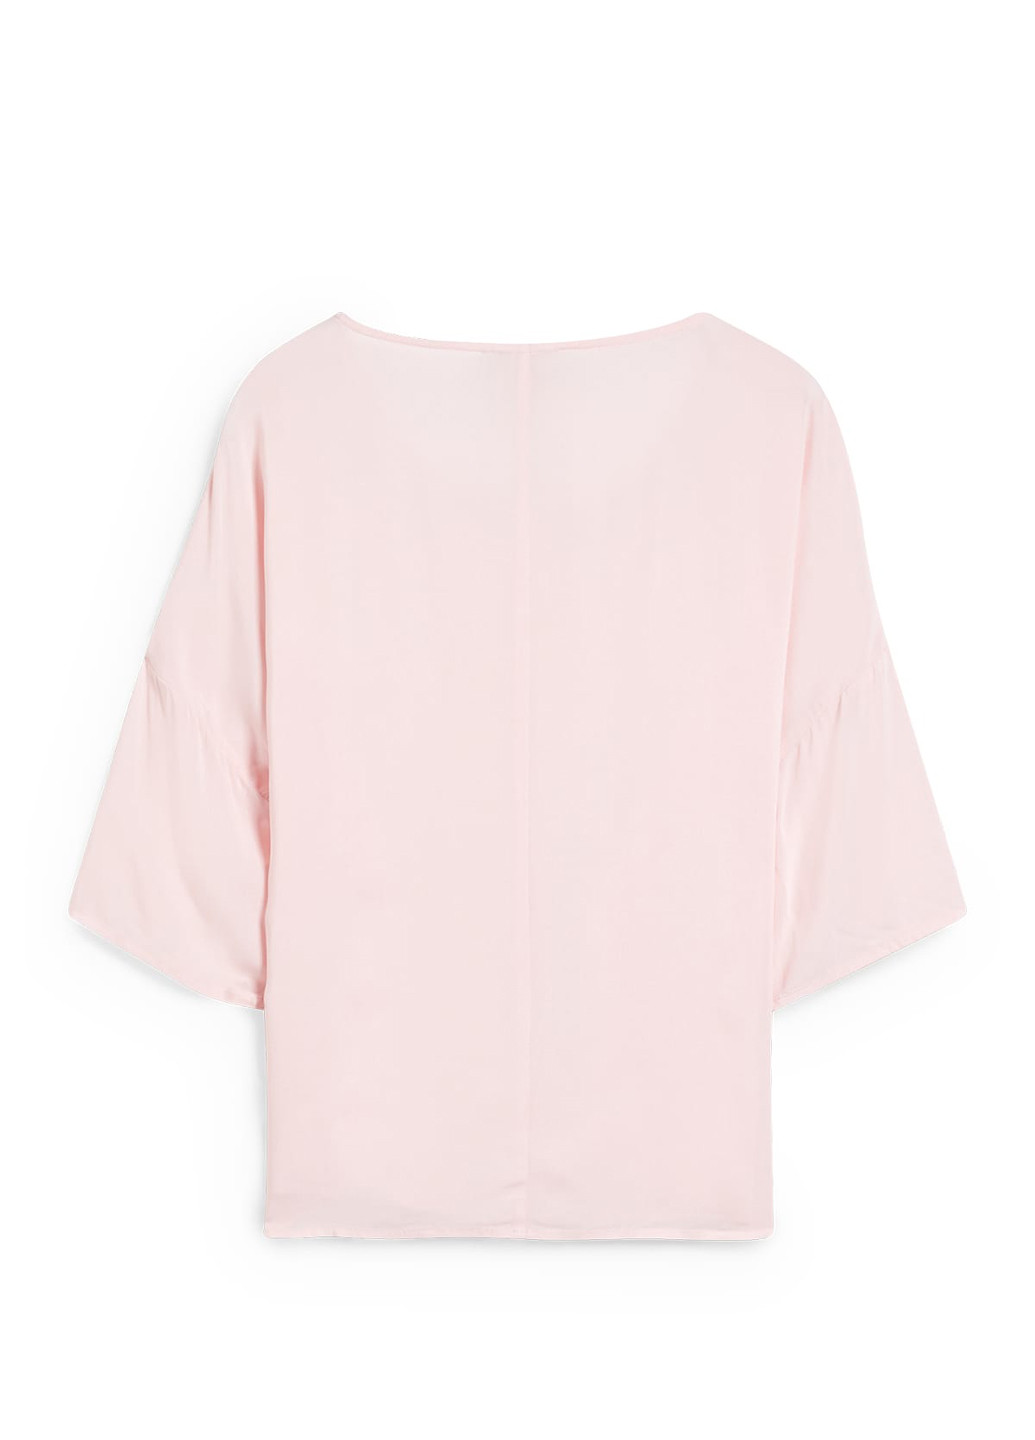 Персиковая летняя блуза C&A